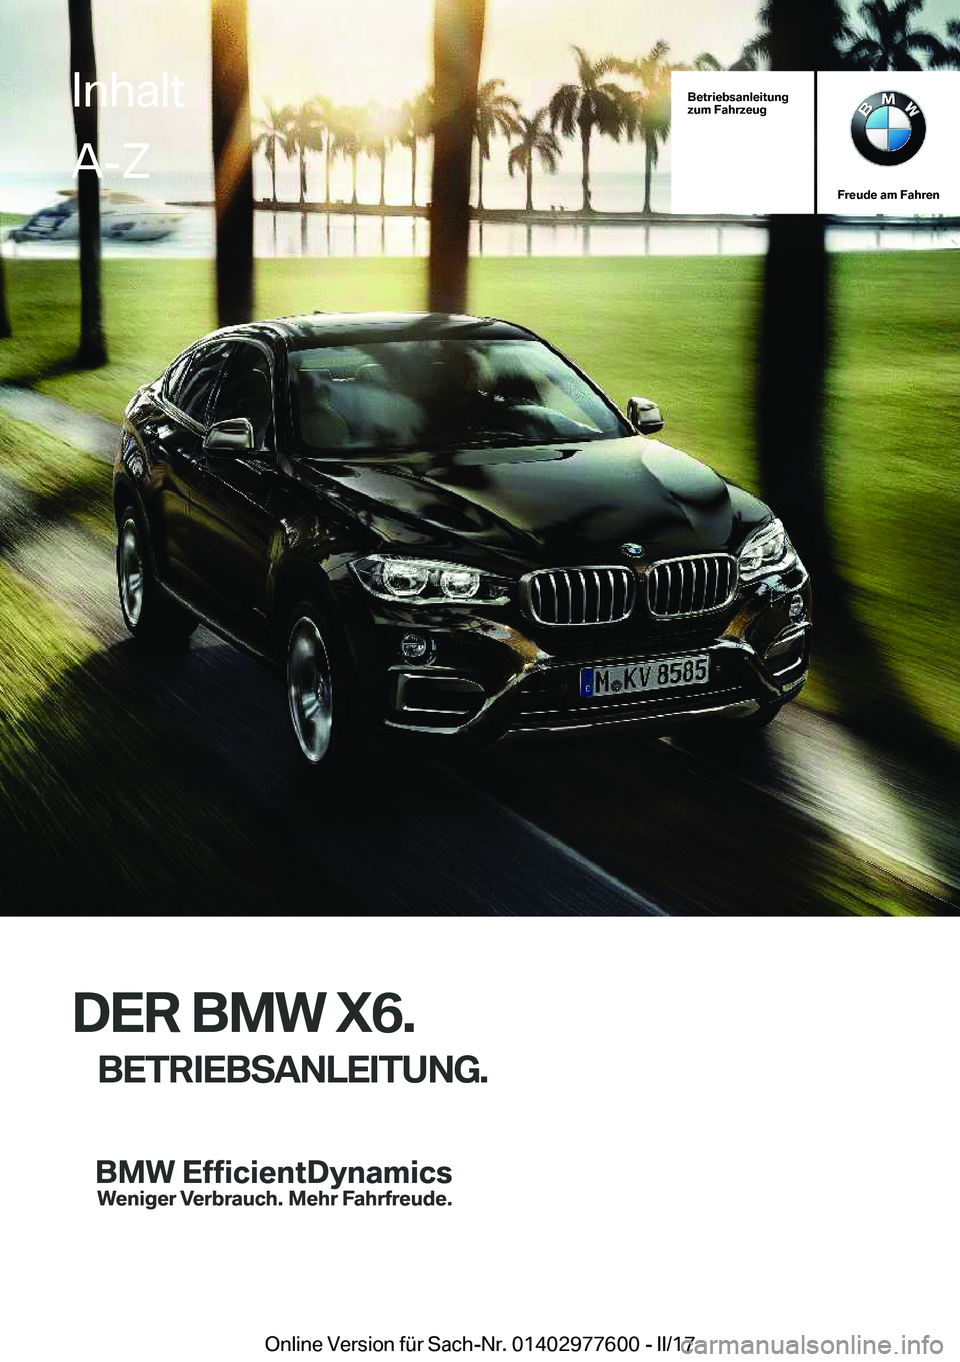 BMW X6 2017  Betriebsanleitungen (in German) �B�e�t�r�i�e�b�s�a�n�l�e�i�t�u�n�g
�z�u�m��F�a�h�r�z�e�u�g
�F�r�e�u�d�e��a�m��F�a�h�r�e�n
�D�E�R��B�M�W��X�6�.
�B�E�T�R�I�E�B�S�A�N�L�E�I�T�U�N�G�.
�I�n�h�a�l�t�A�-�Z
�O�n�l�i�n�e� �V�e�r�s�i�o�n